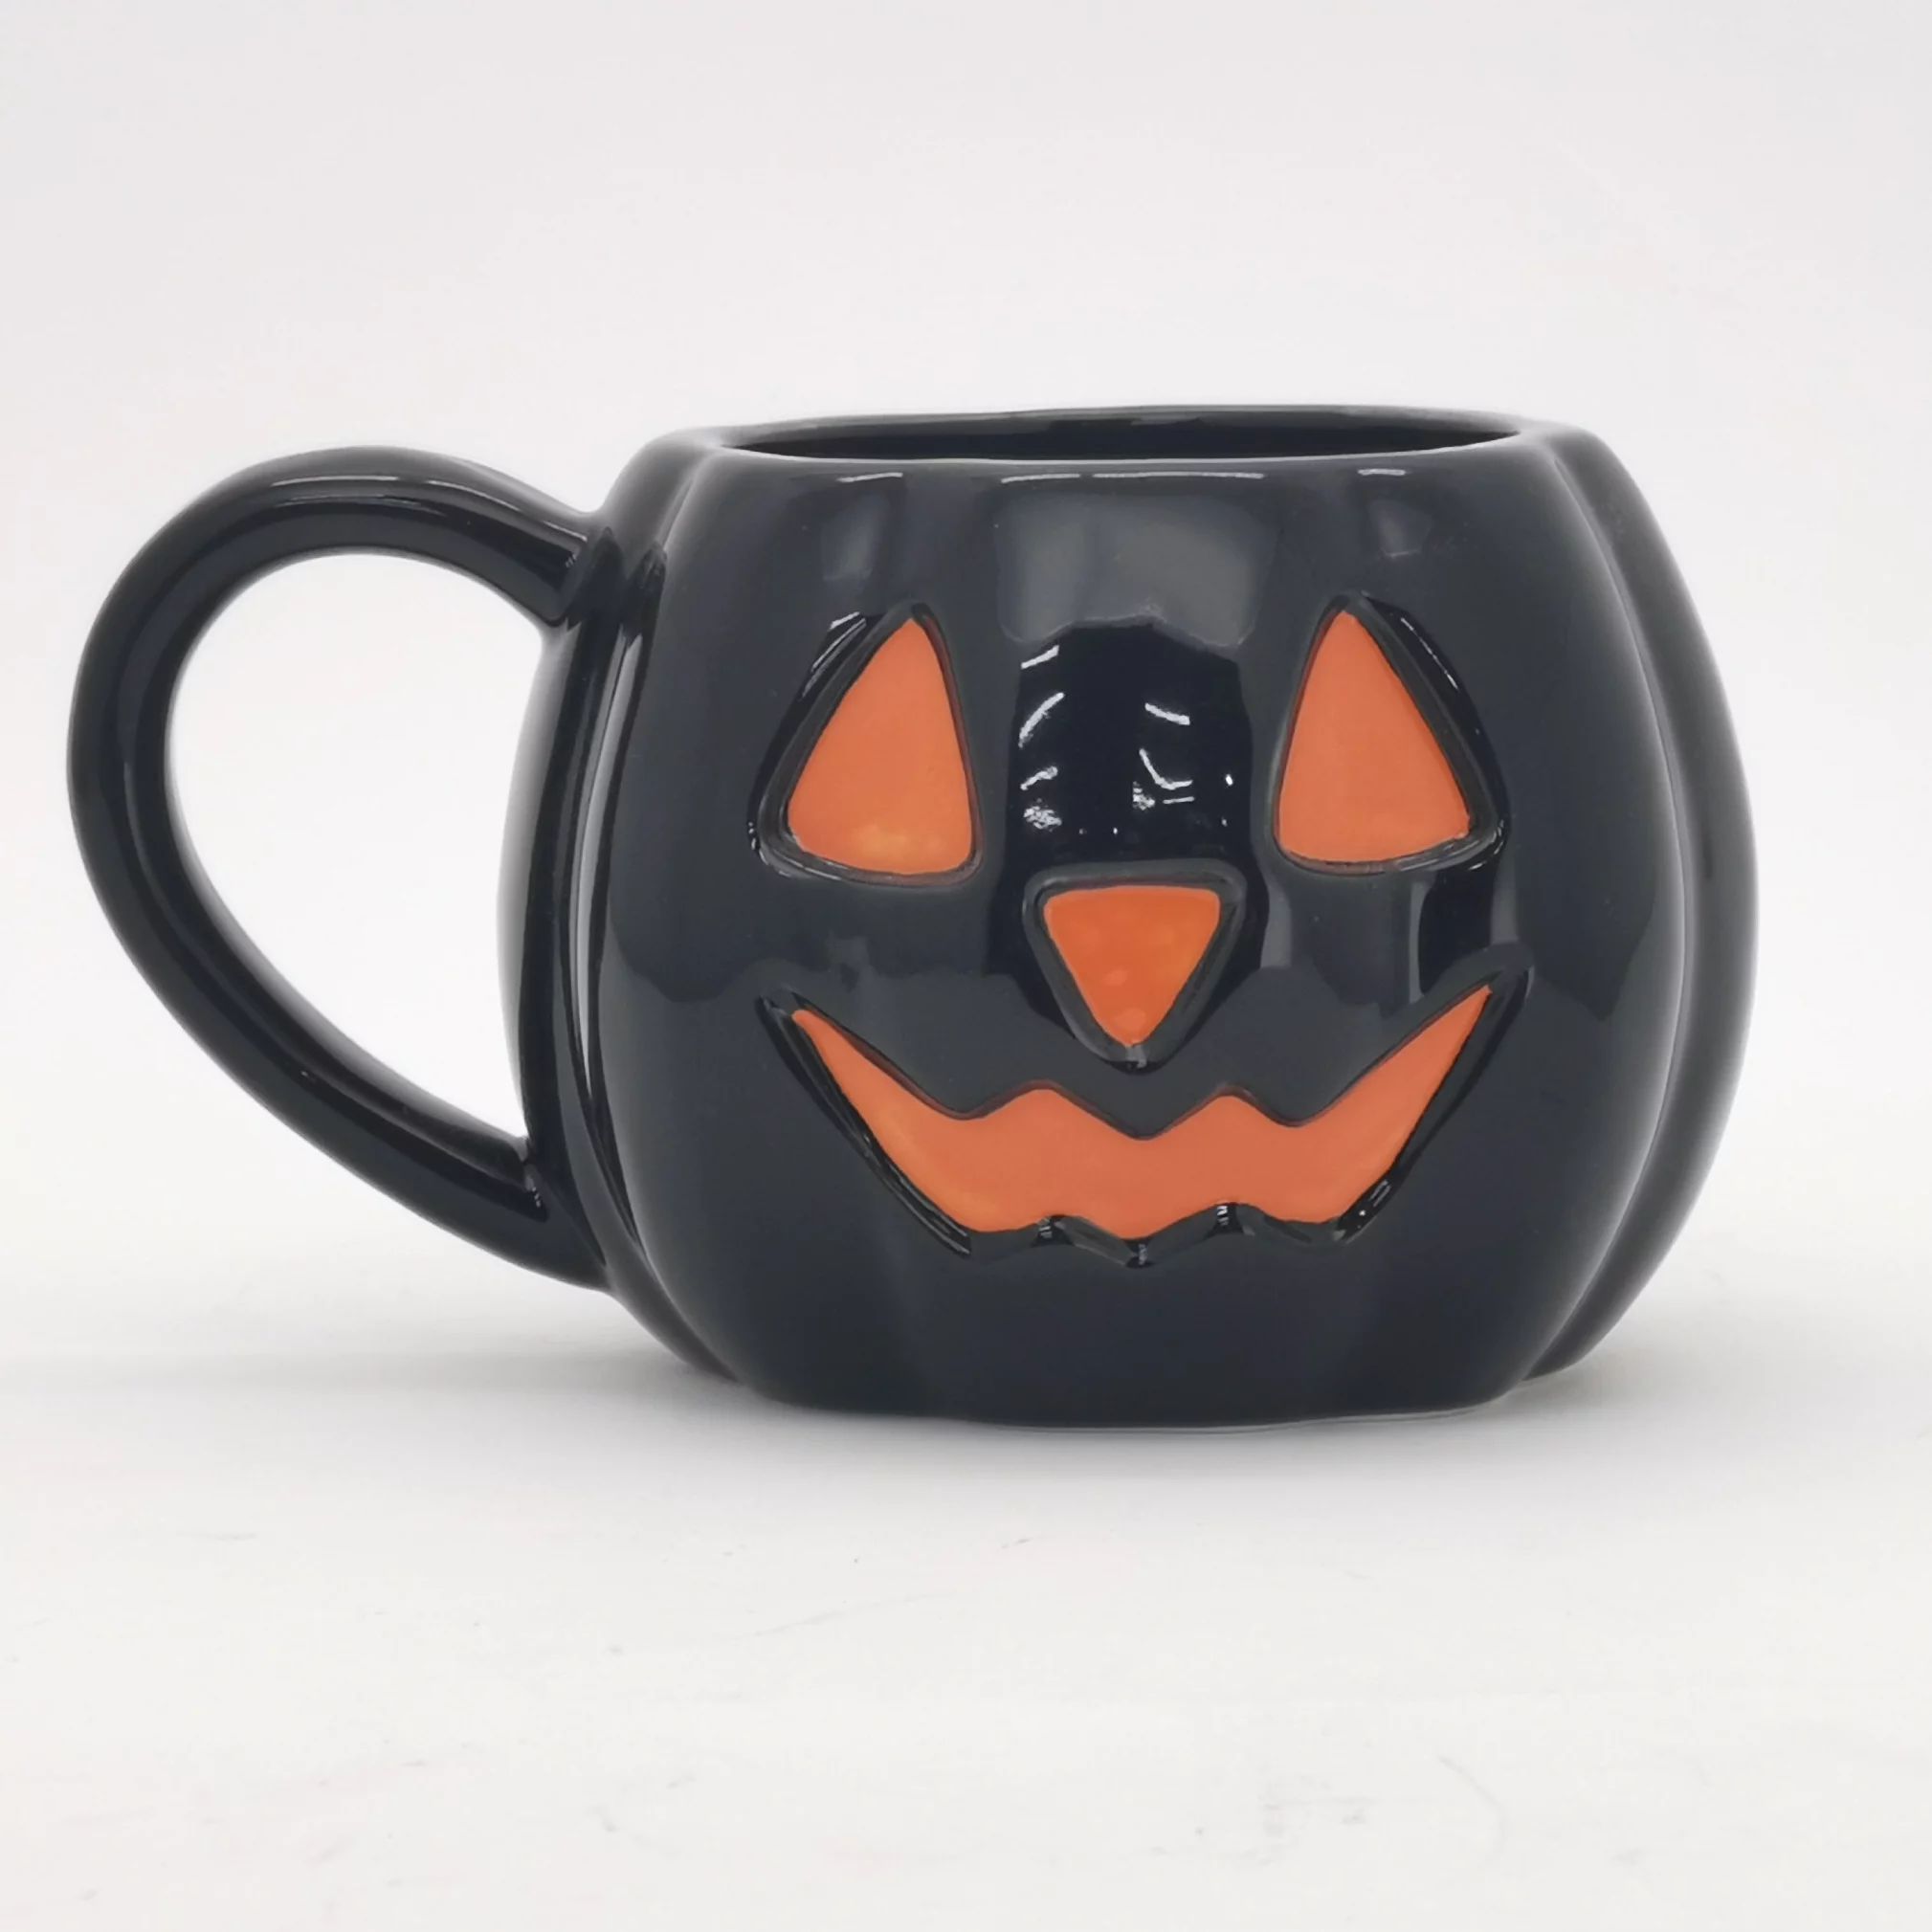 Way to Celebrate! Black Pumpkin Mug, 19 fl oz Capacity, Stoneware | Walmart (US)